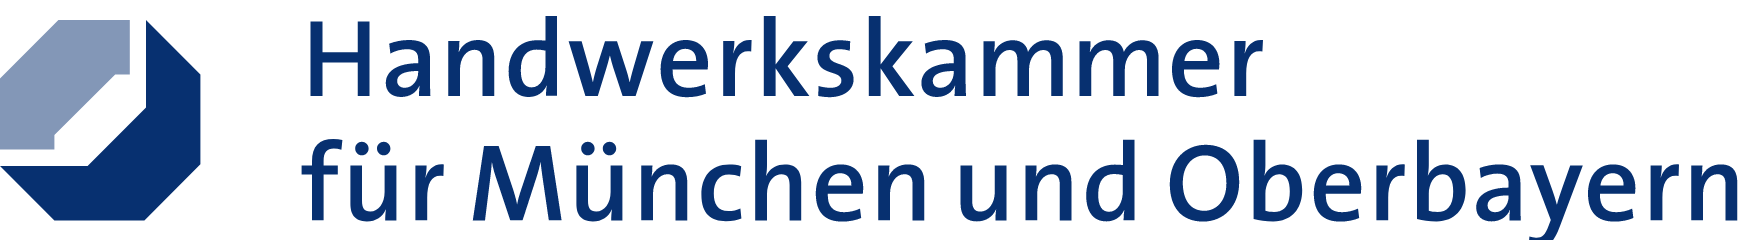 HWK Handwerkskammer München (HWK) Logo